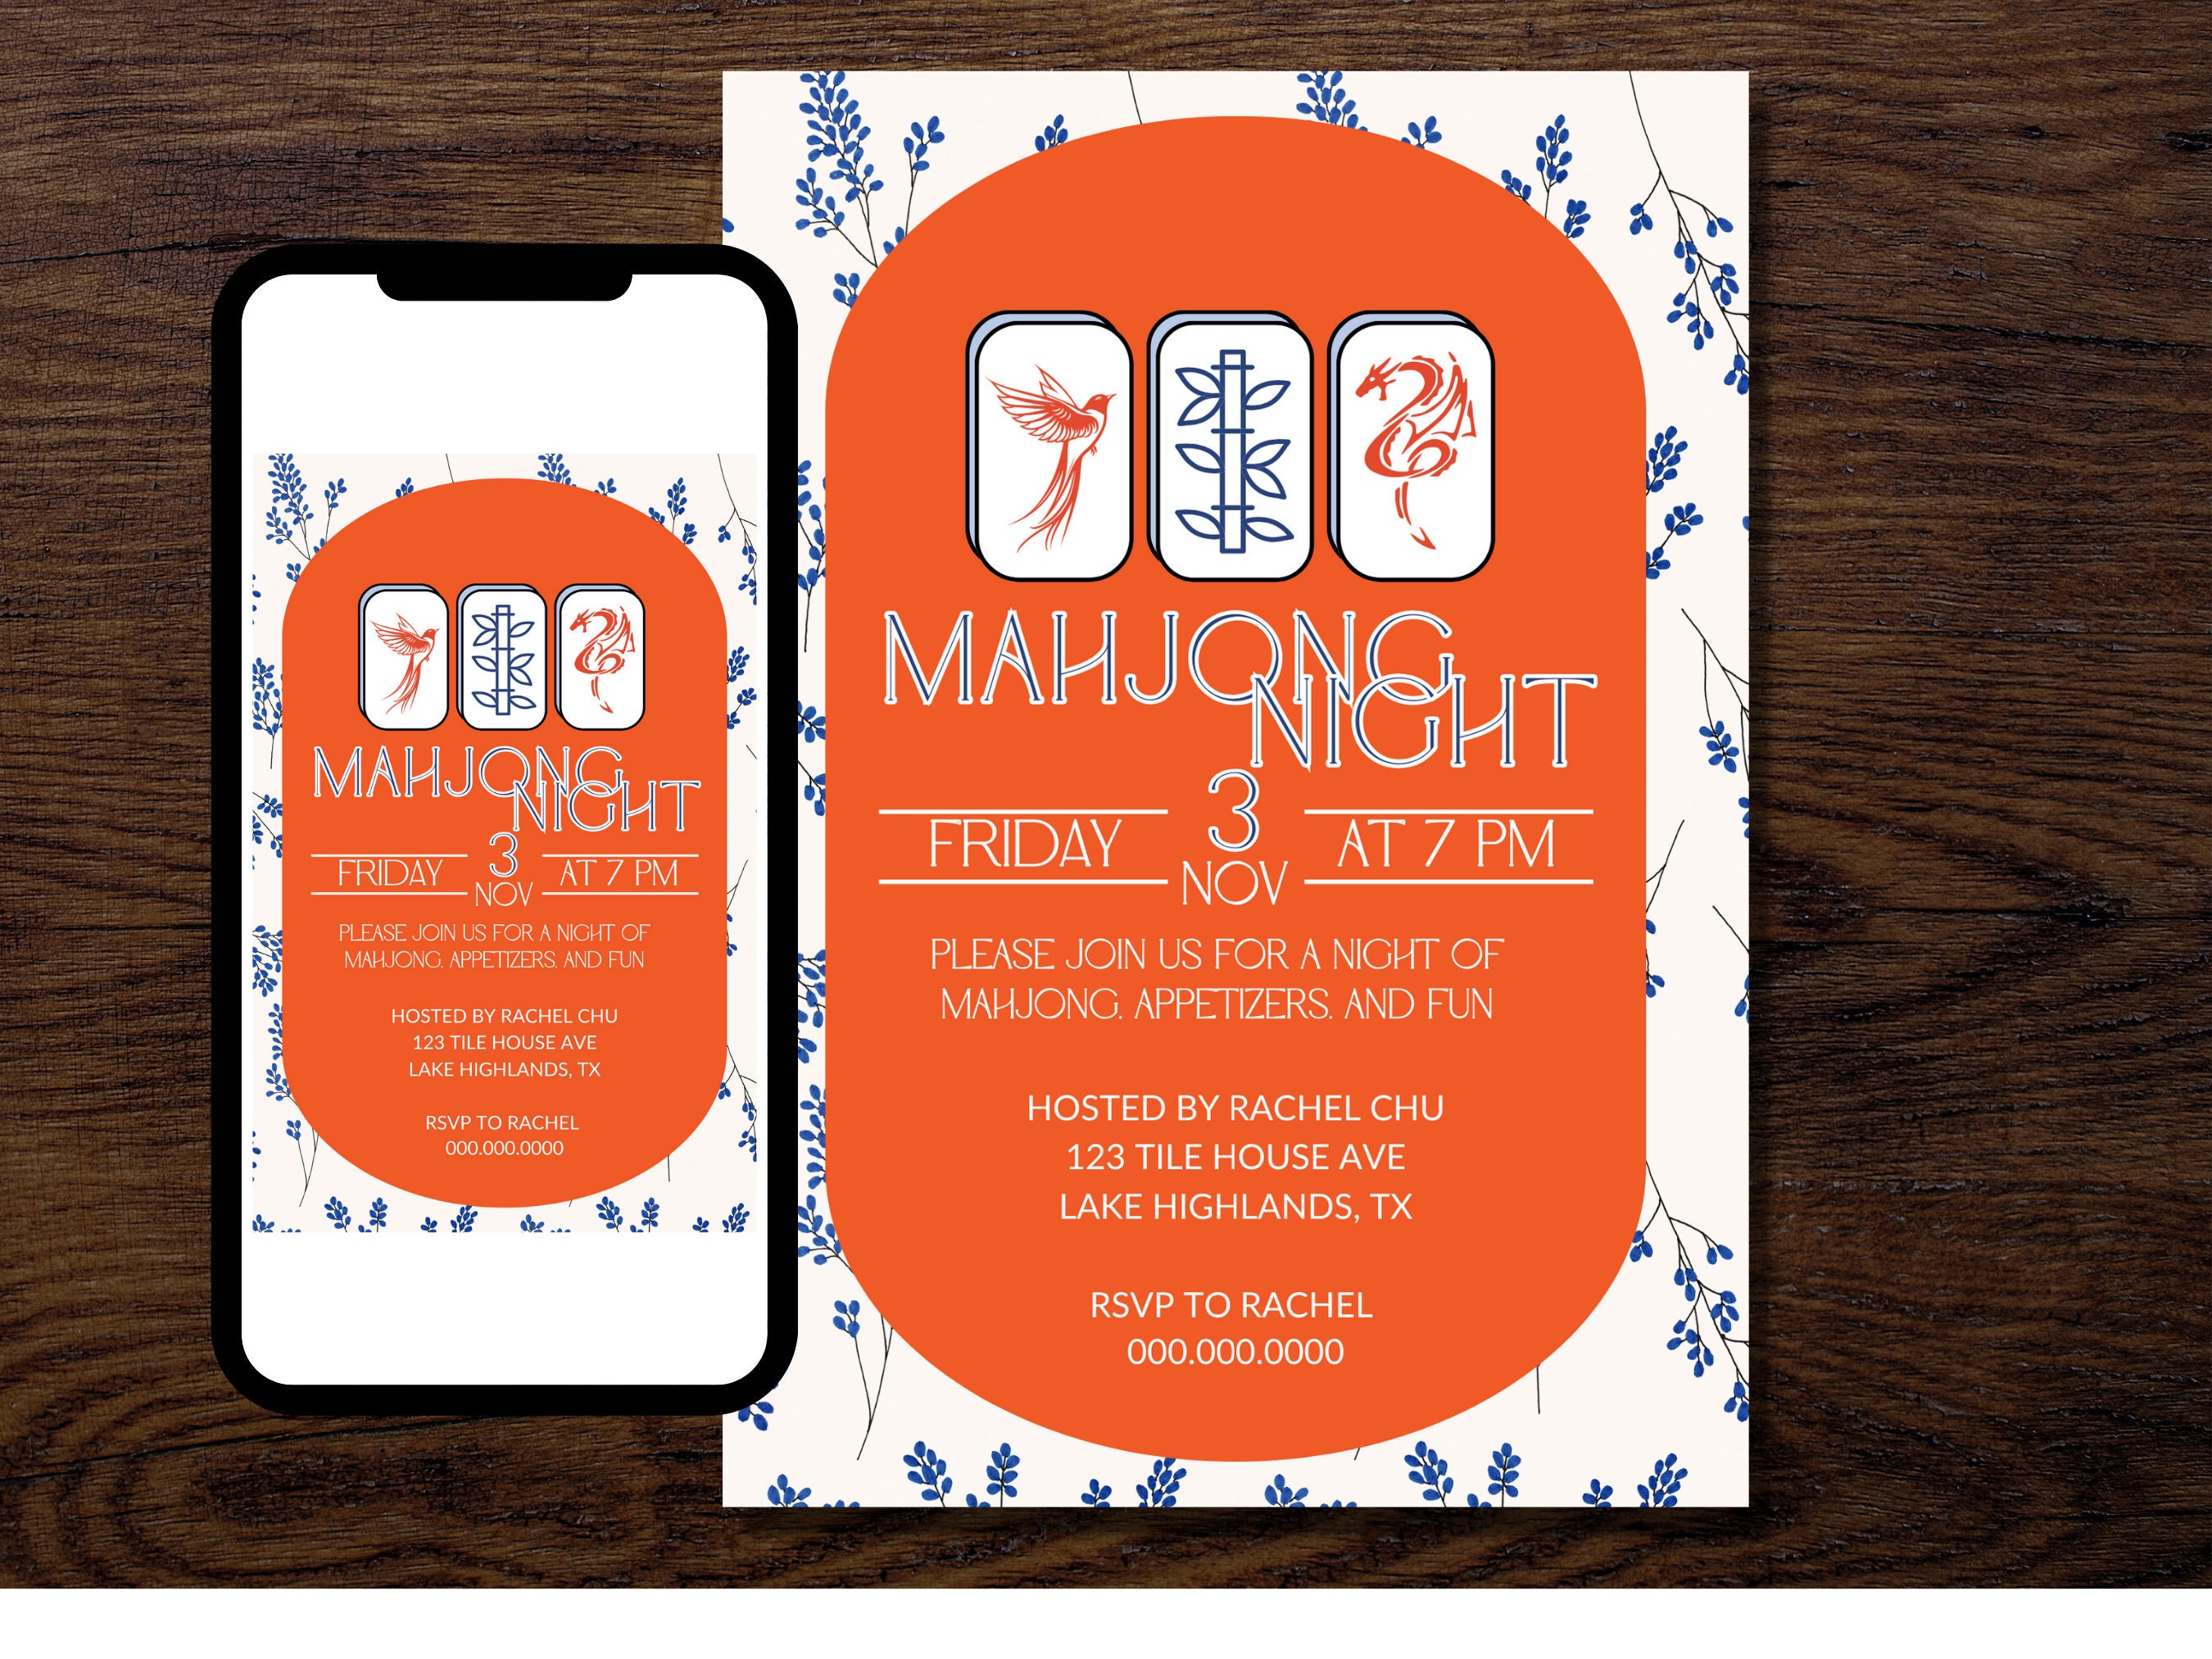 Halloween Night Mahjong Game - Free Download